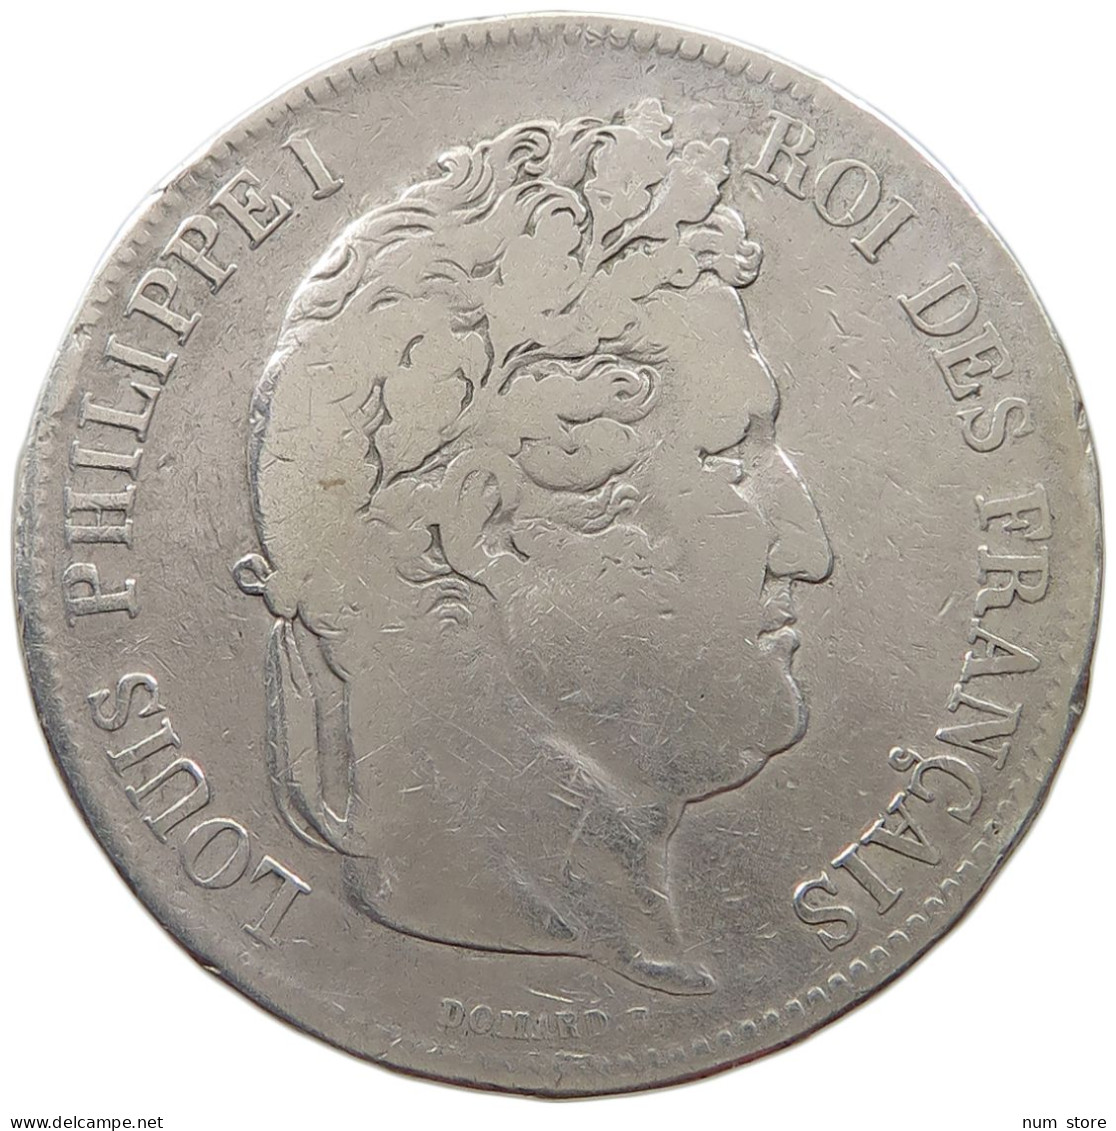 FRANCE 5 FRANCS 1835 W LOUIS PHILIPPE I. (1830-1848) #a001 0133 - 5 Francs